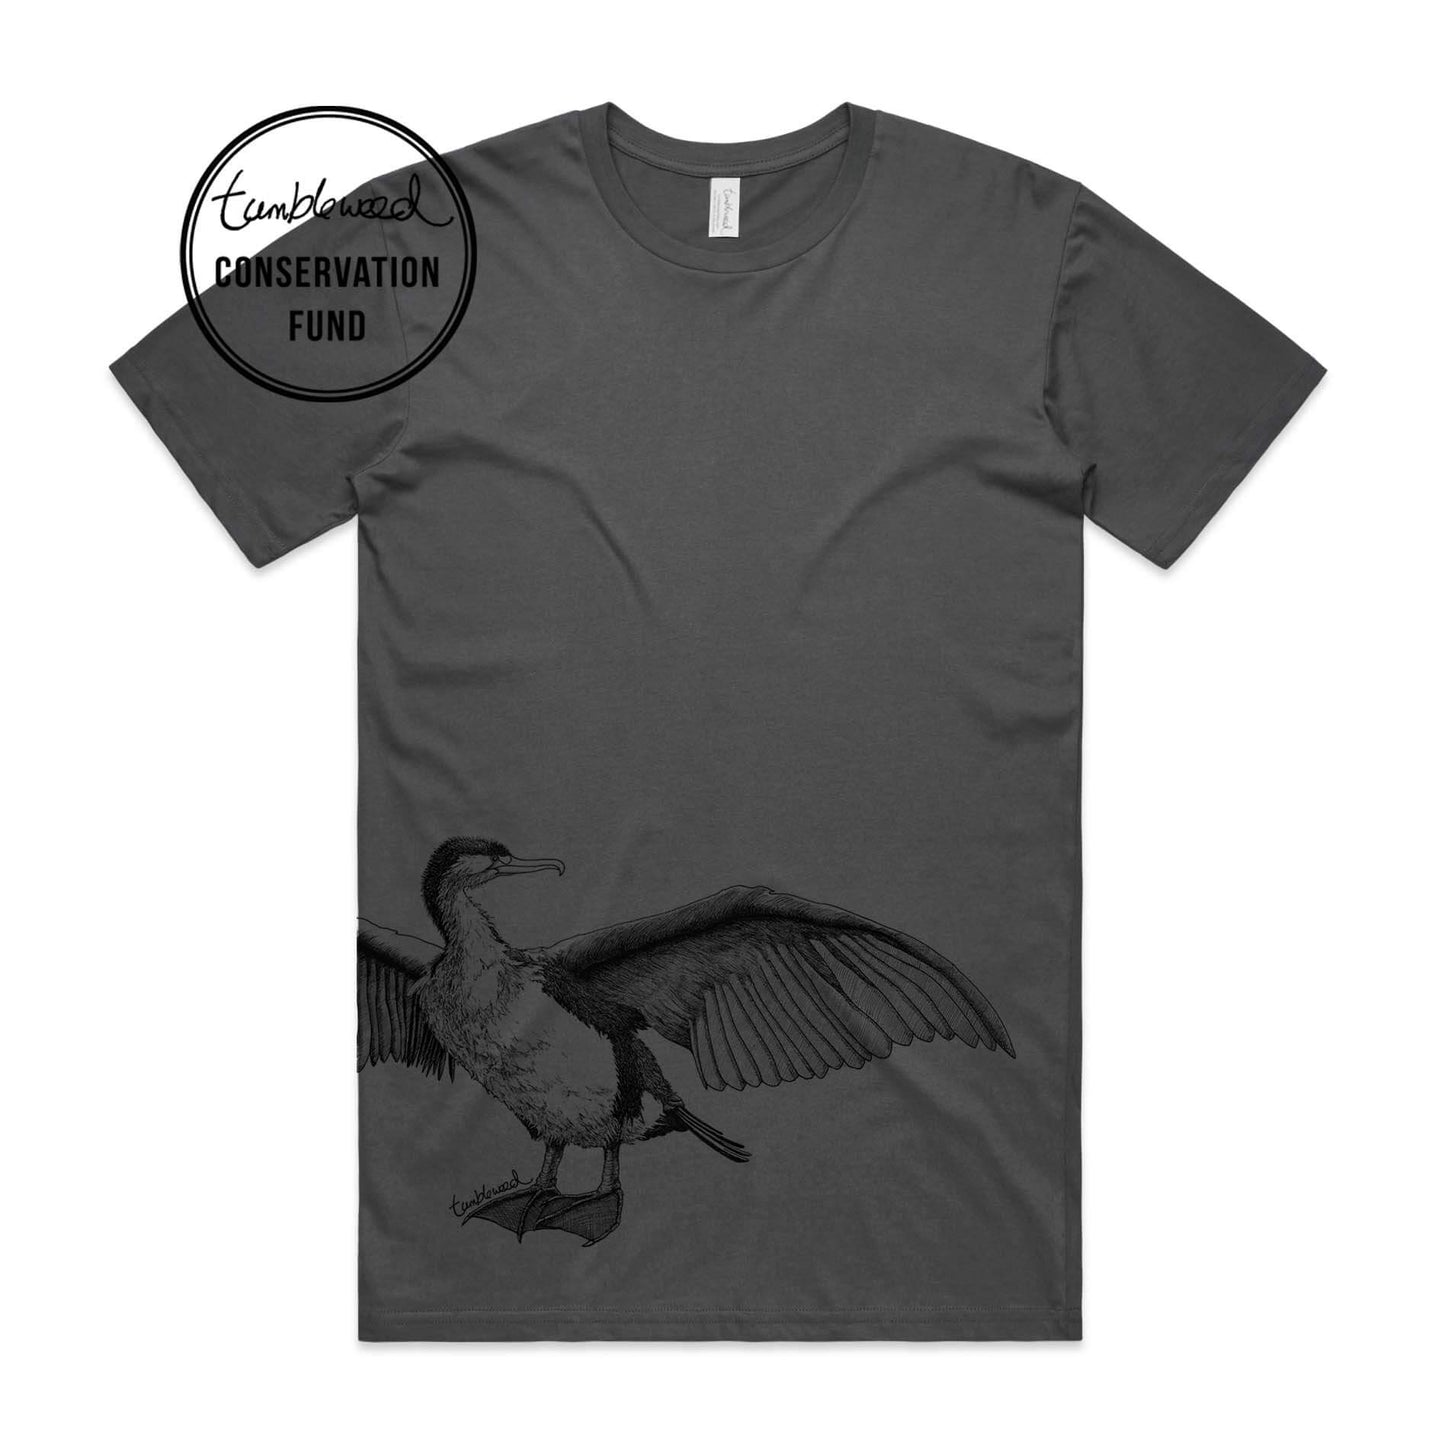 Charcoal, female t-shirt featuring a screen printed Shag design.